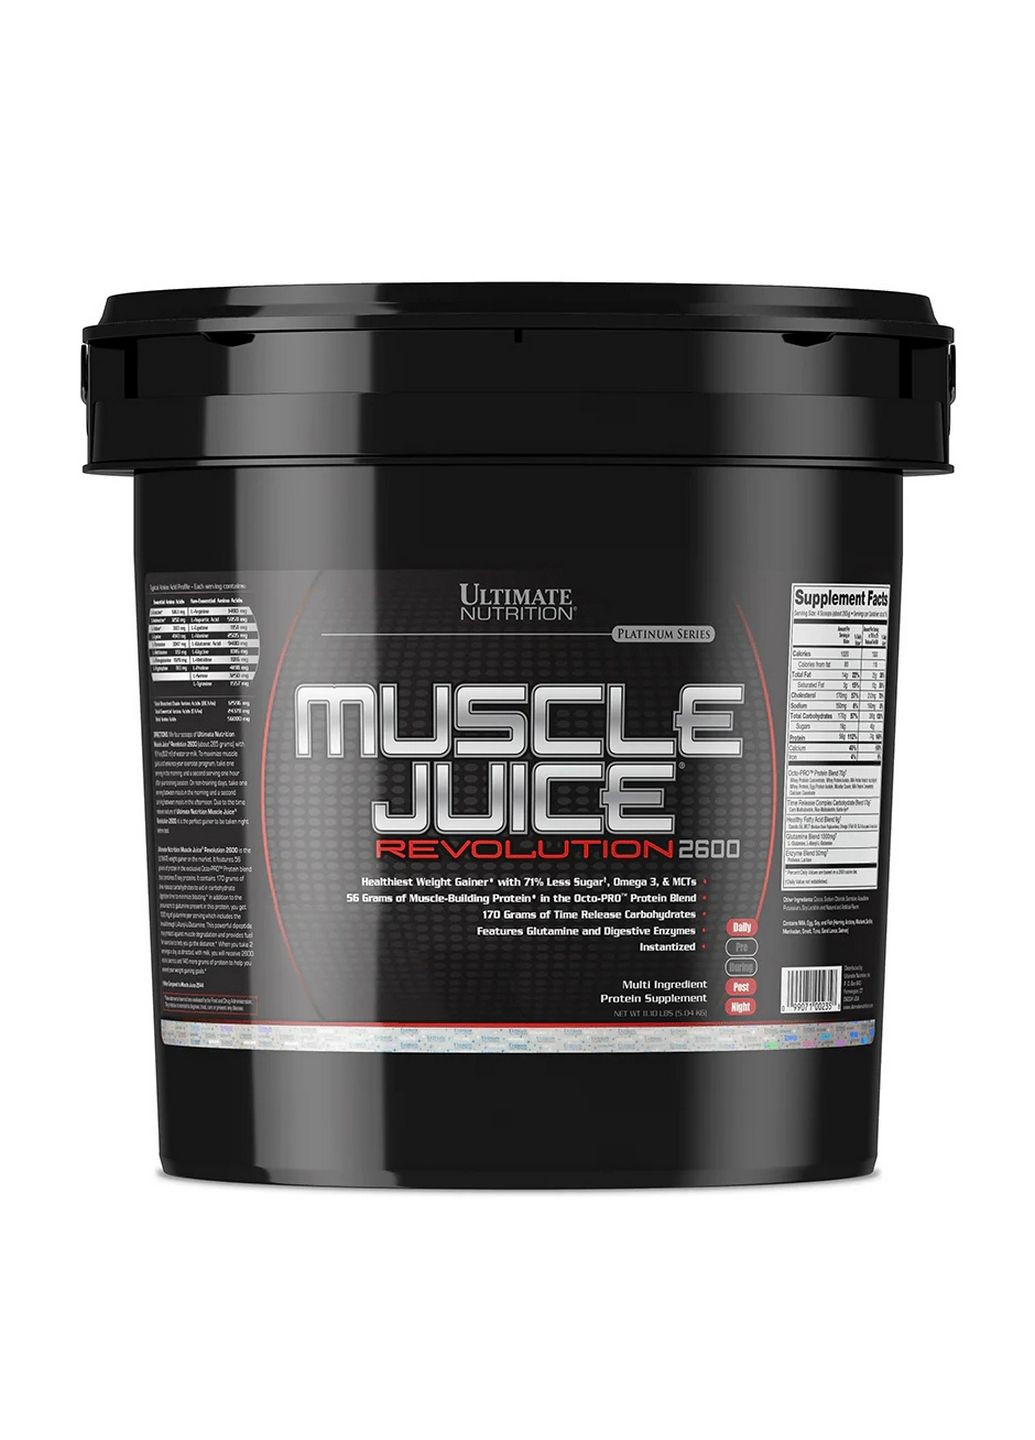 Гейнер Ultimate Muscle Juice Revolution 2600, 5 кг Банан Ultimate Nutrition (293478171)